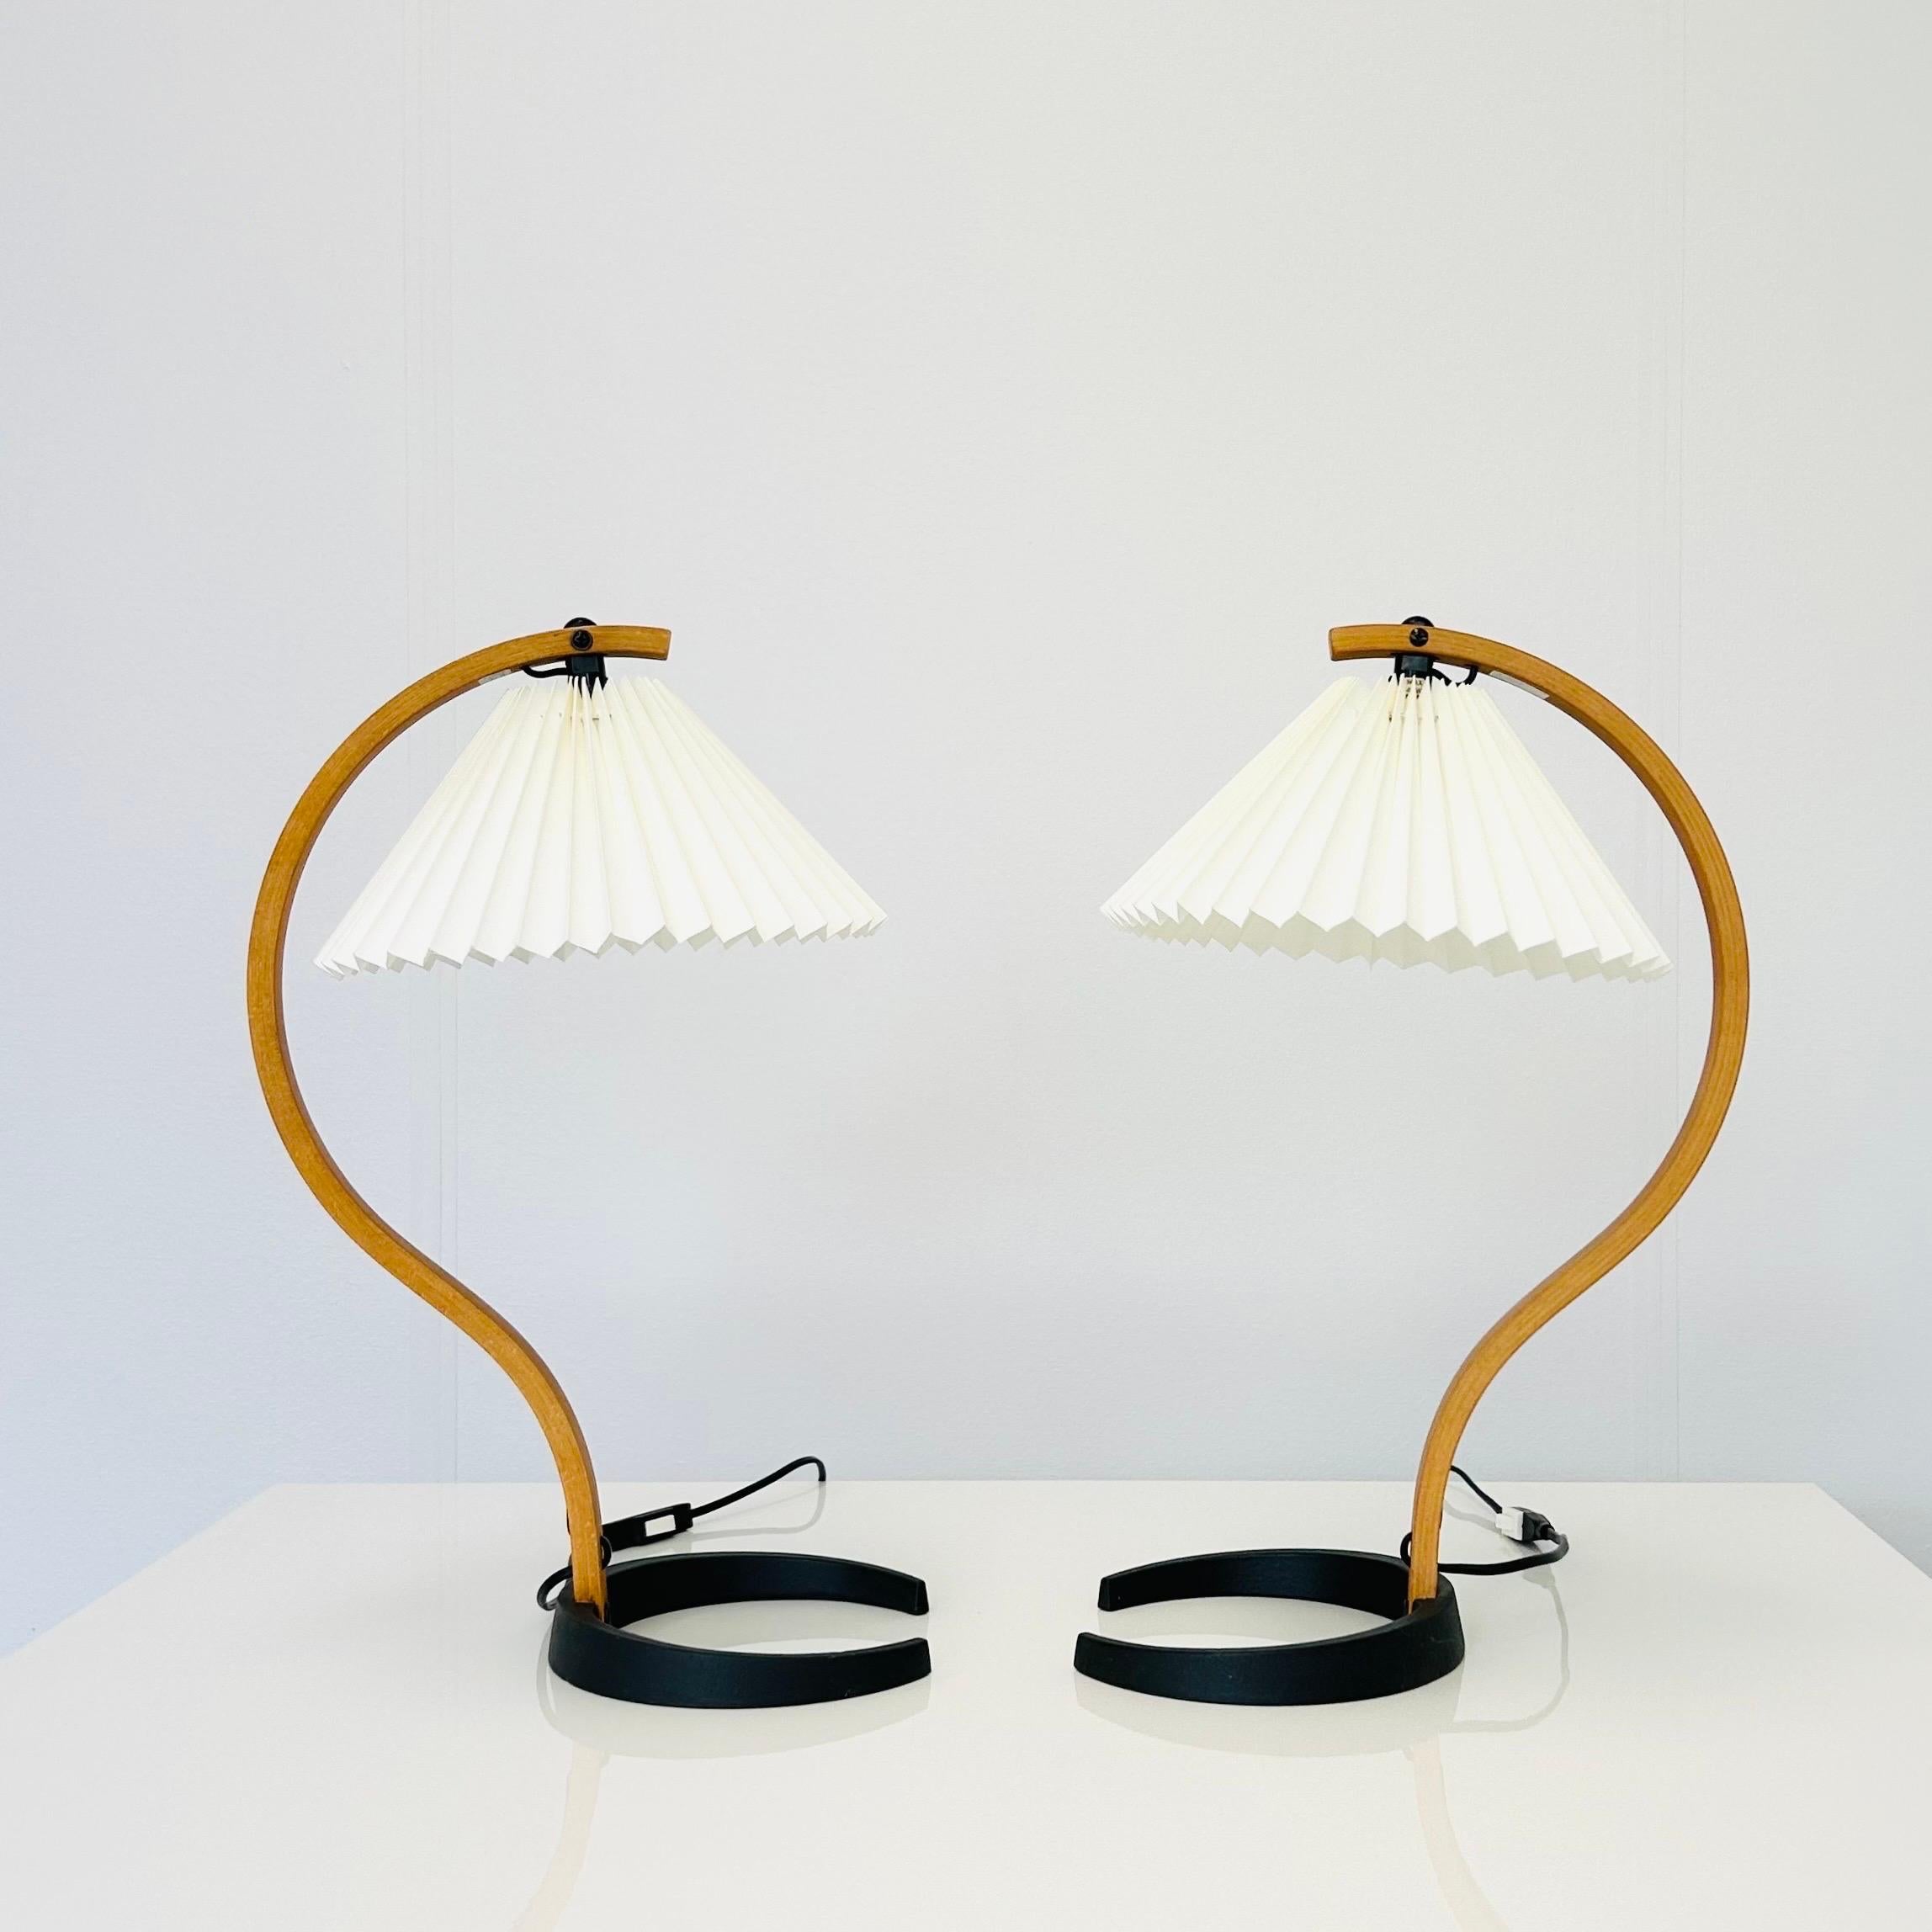 Set of Original Danish Caprani Desk Lamps, 1970s, Denmark For Sale 1